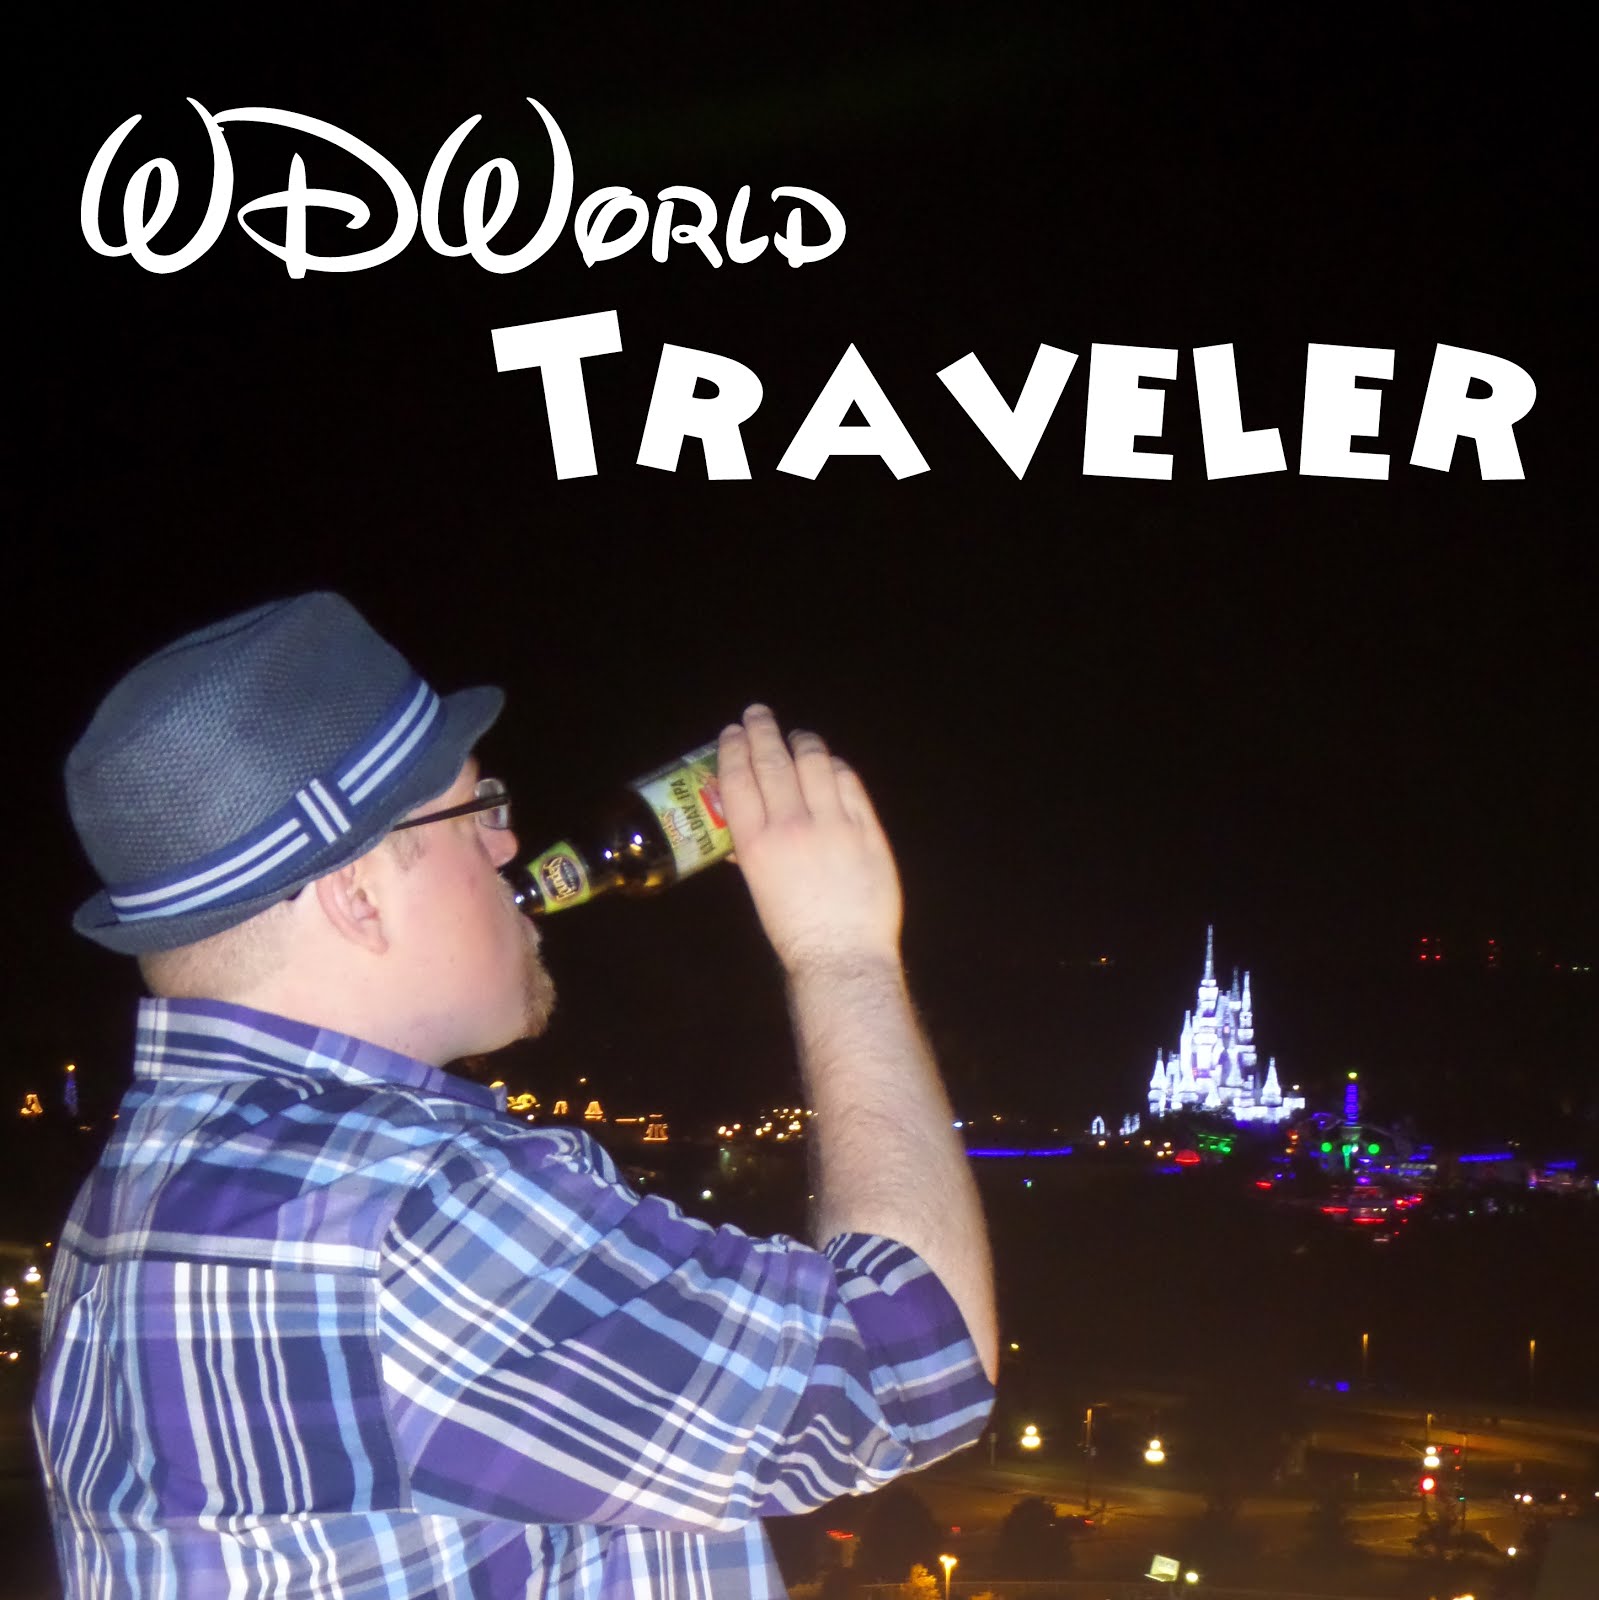 WDWorld Traveler